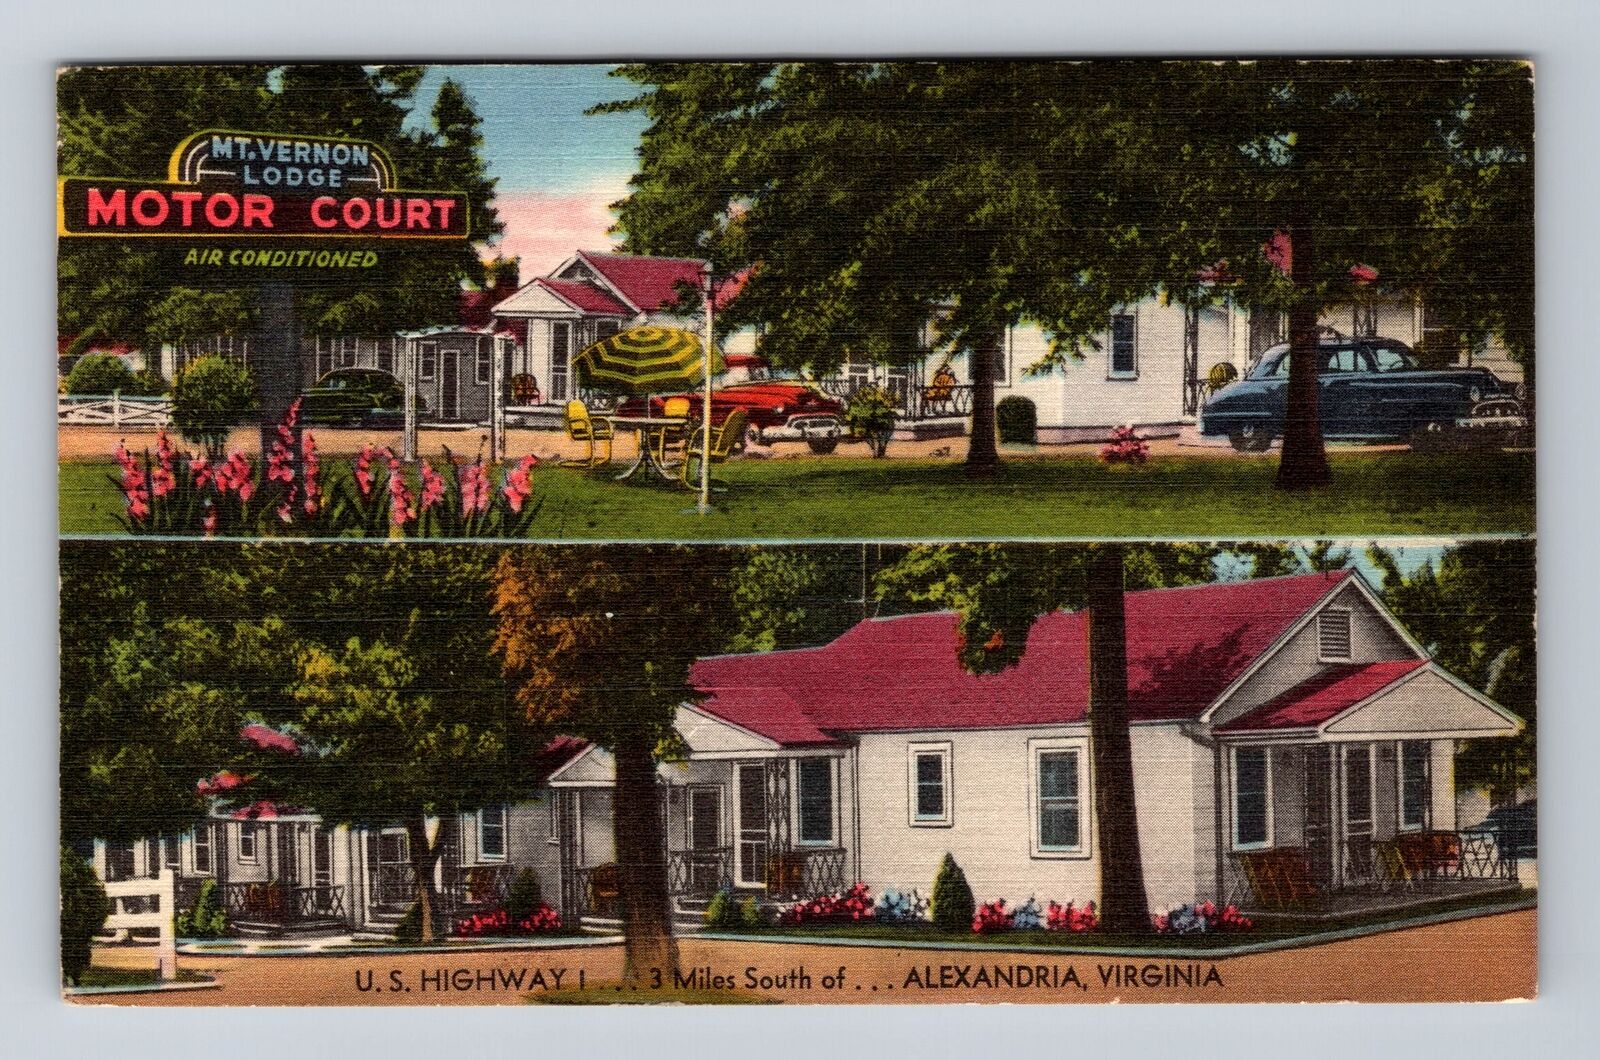 Alexandria VA-Virginia, Mt Vernon Lodge Motor Court Advertising Vintage Postcard